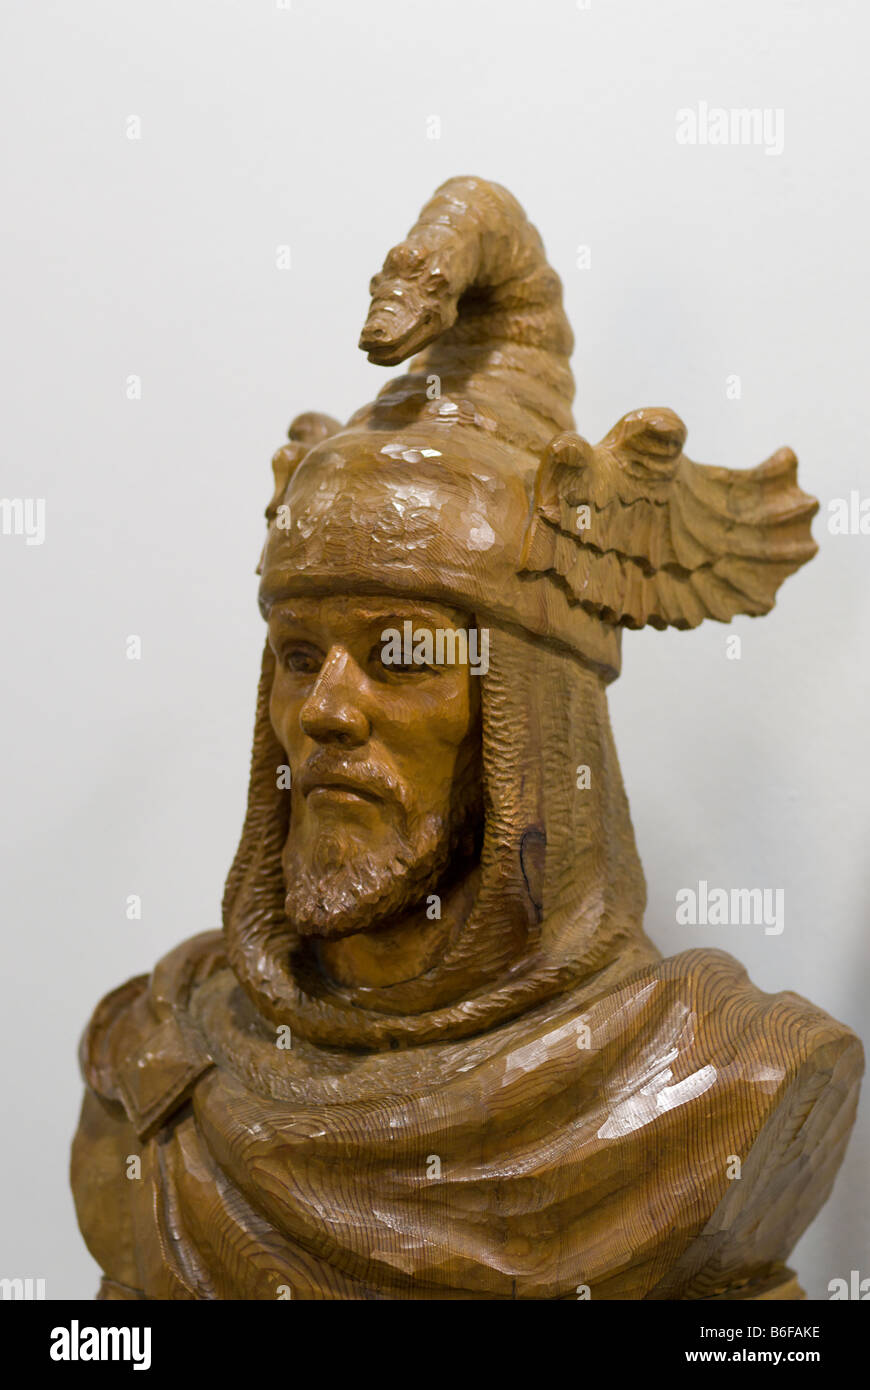 Wooden bust of king Rey Jaime I who freed Valencia from Moorish rule City Museum of Valencia Spain Museo de la Ciudad Stock Photo